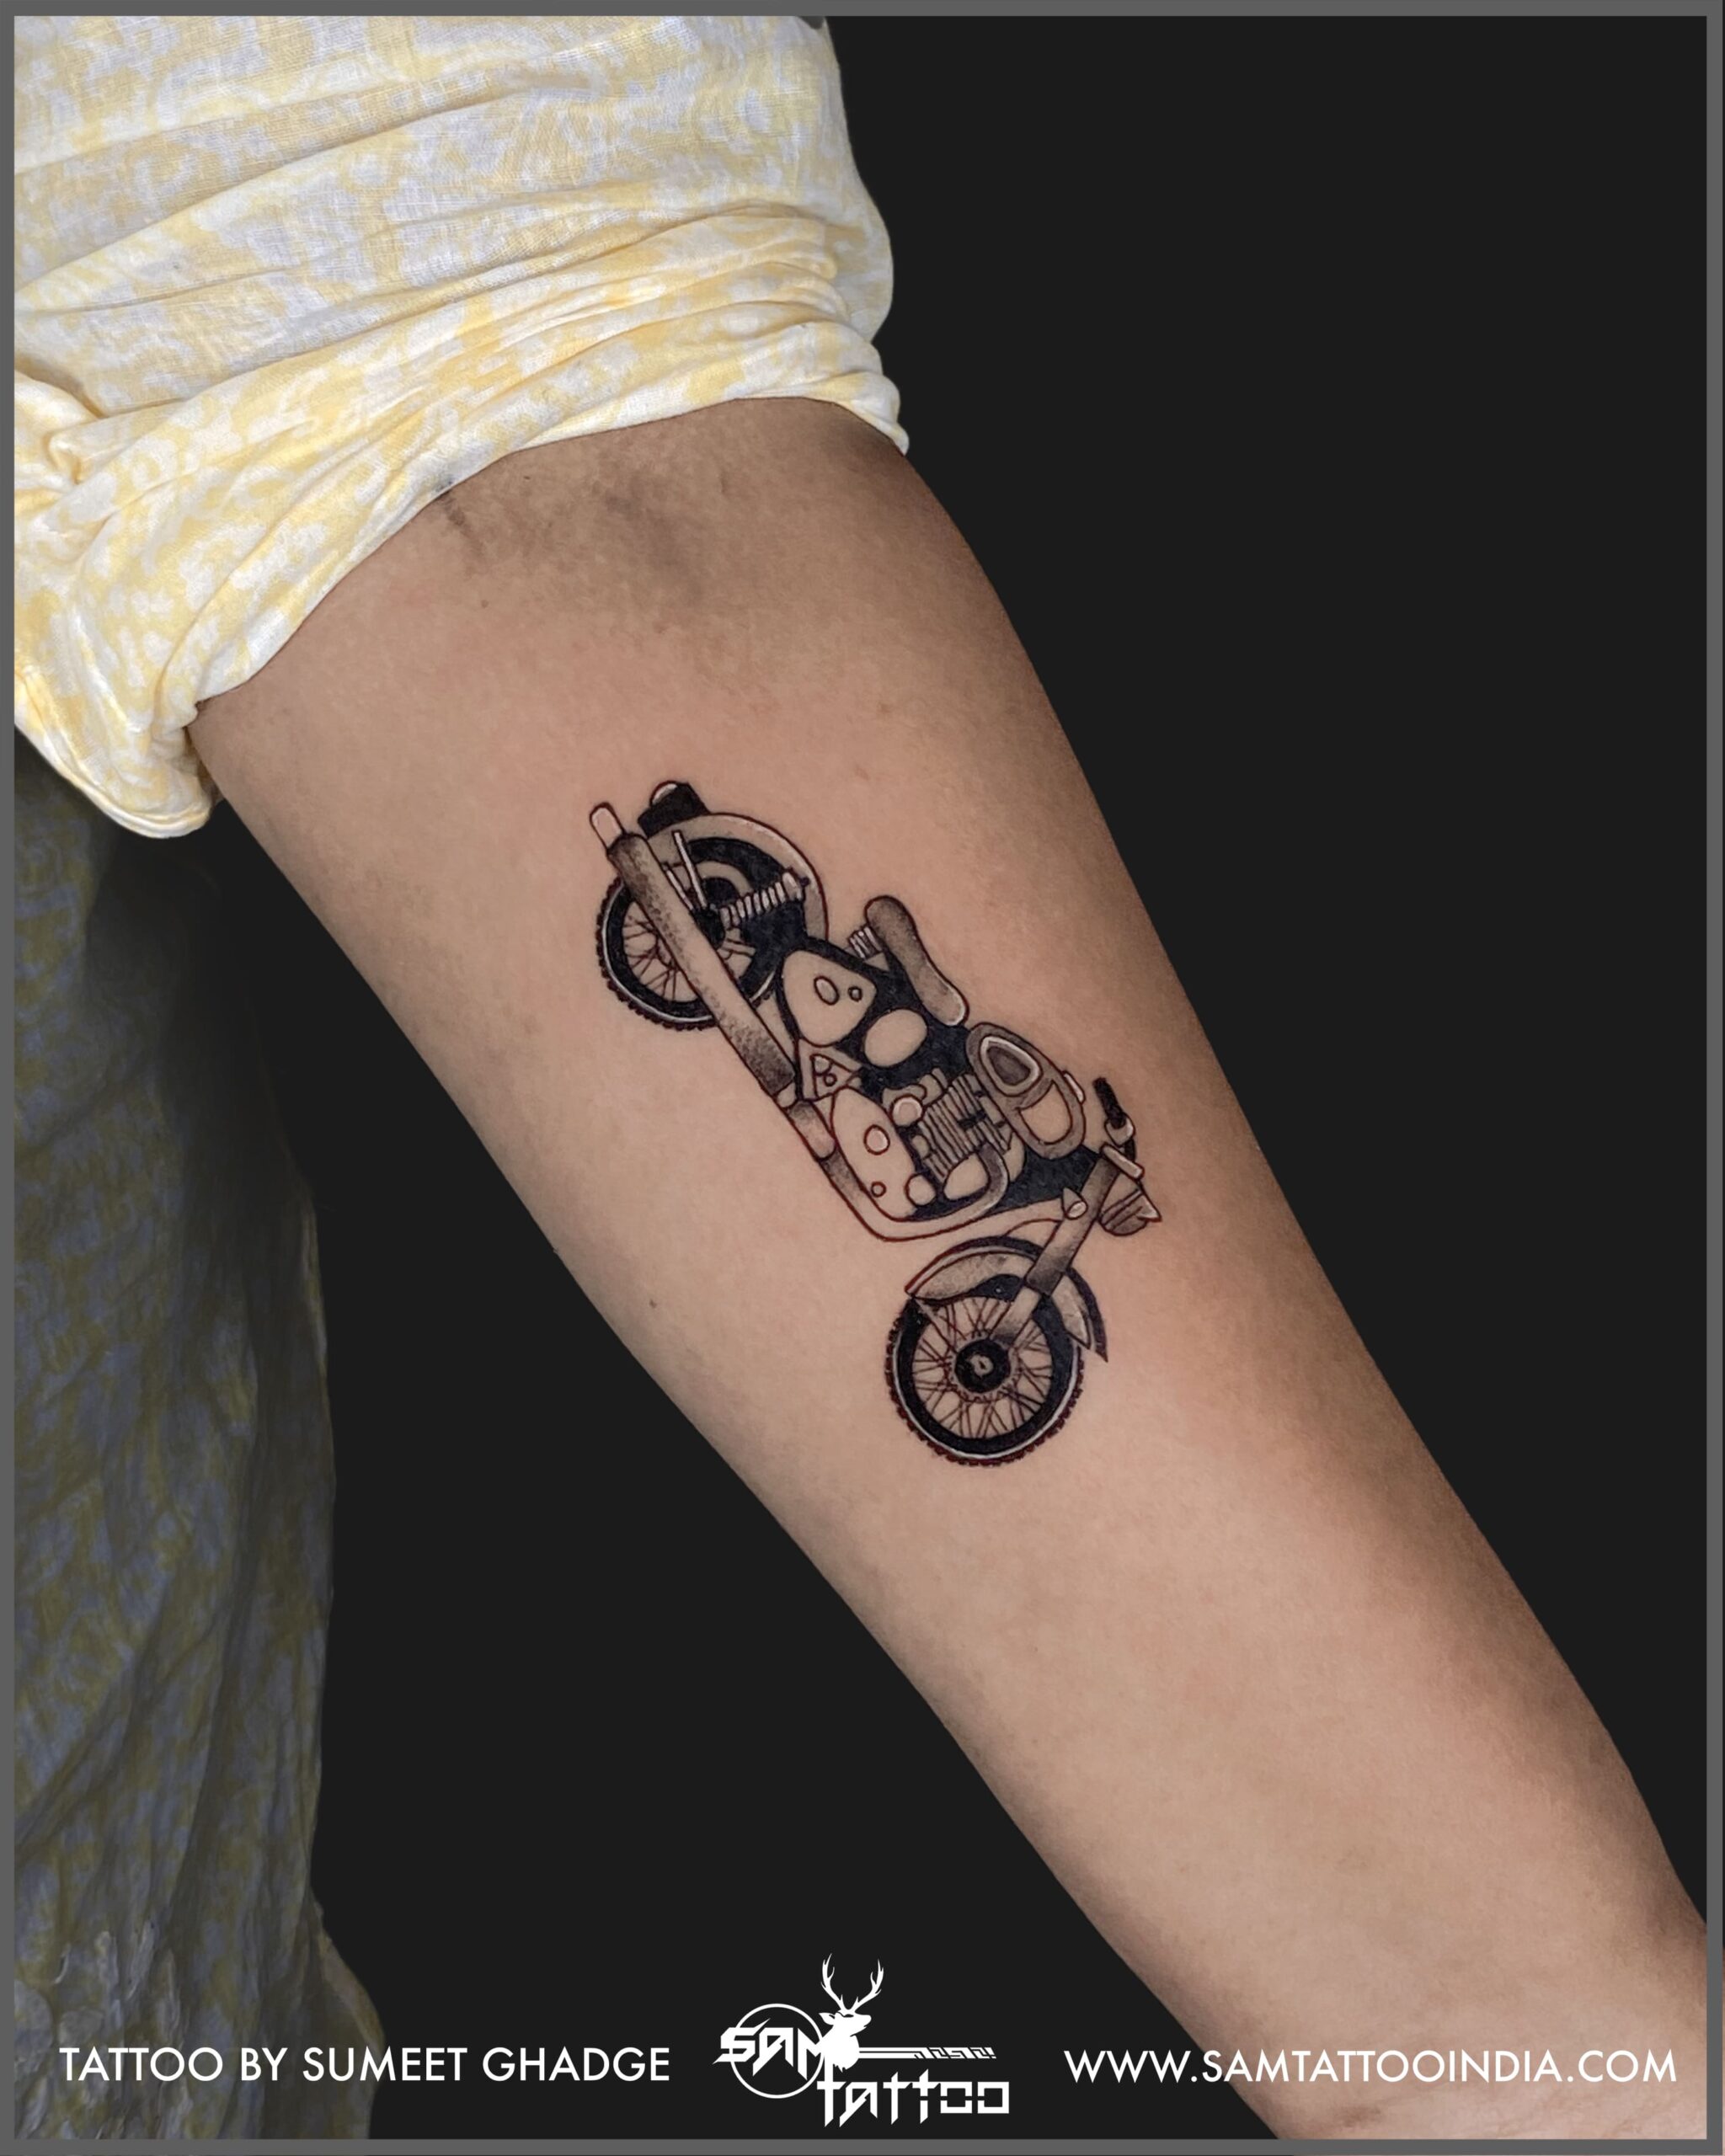 Tattoo uploaded by Vipul Chaudhary  Royal Enfield Bullet tattoo Bullet  bike tattoo Bike tattoo Tattoo for boys Rider tattoo  Tattoodo